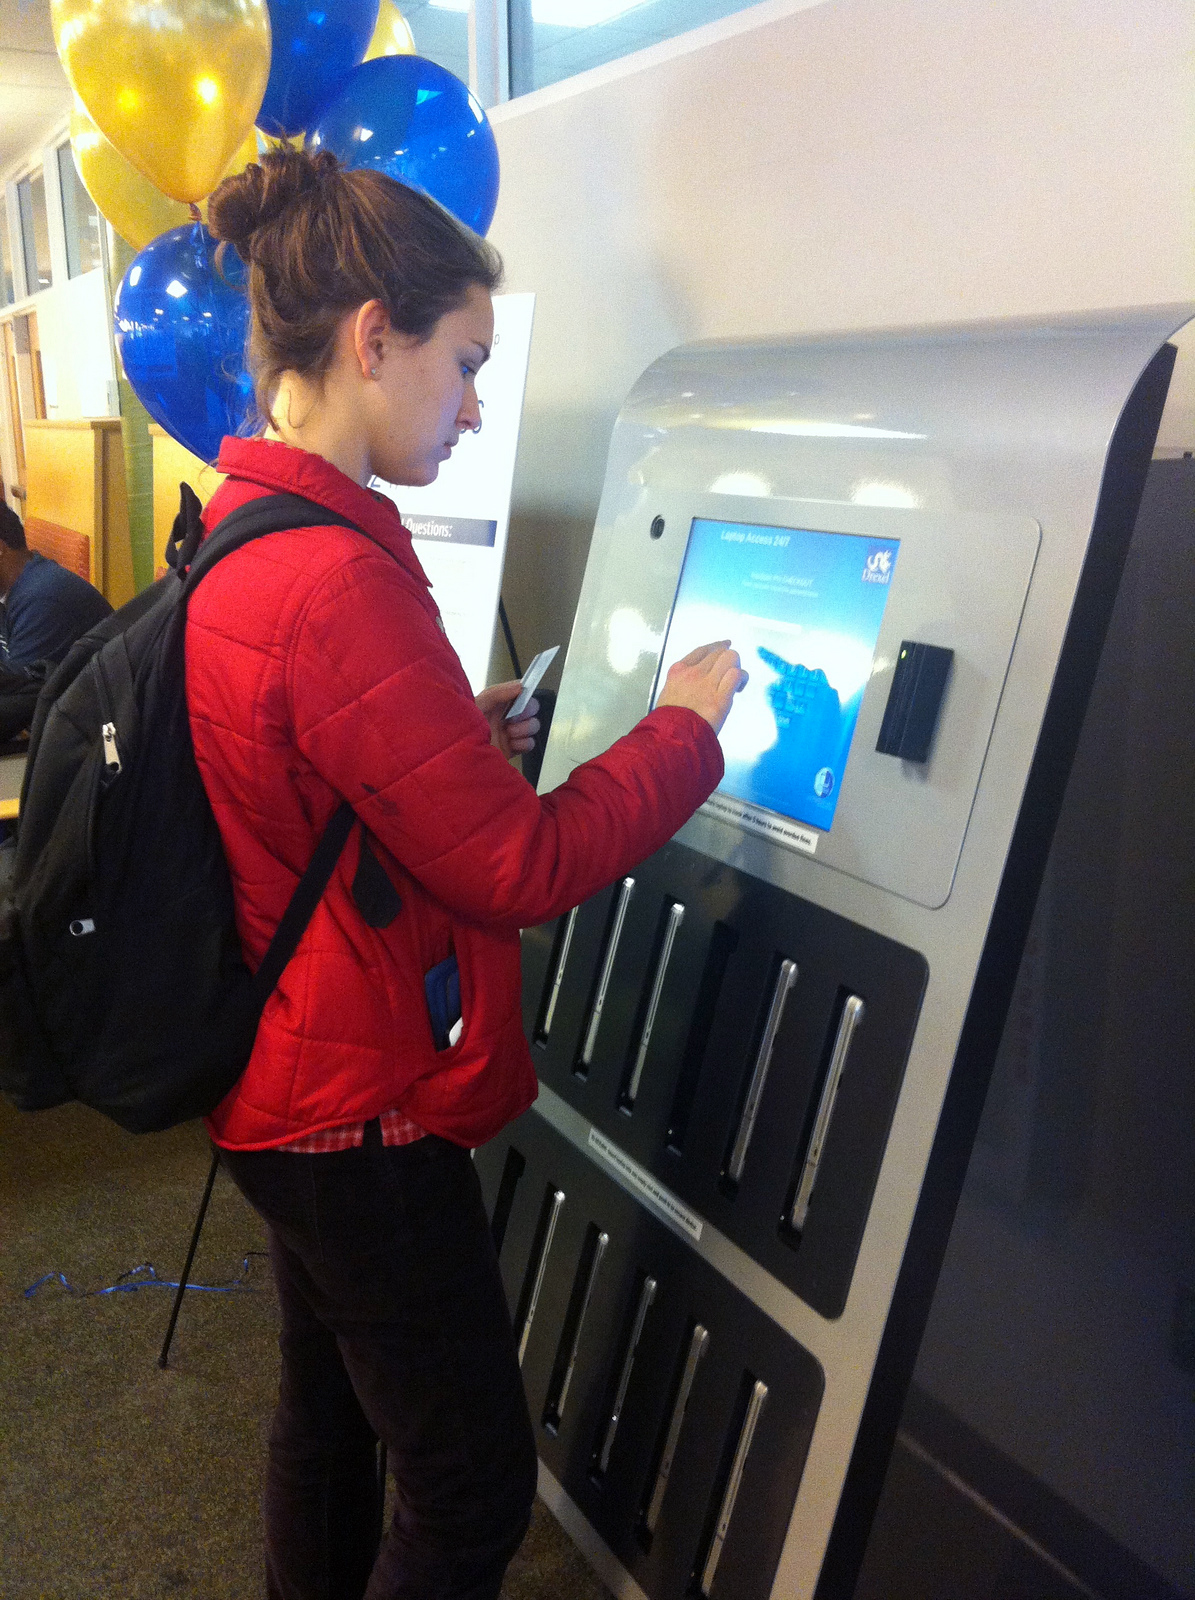 ↪ American University installs ATM to rent MacBooks